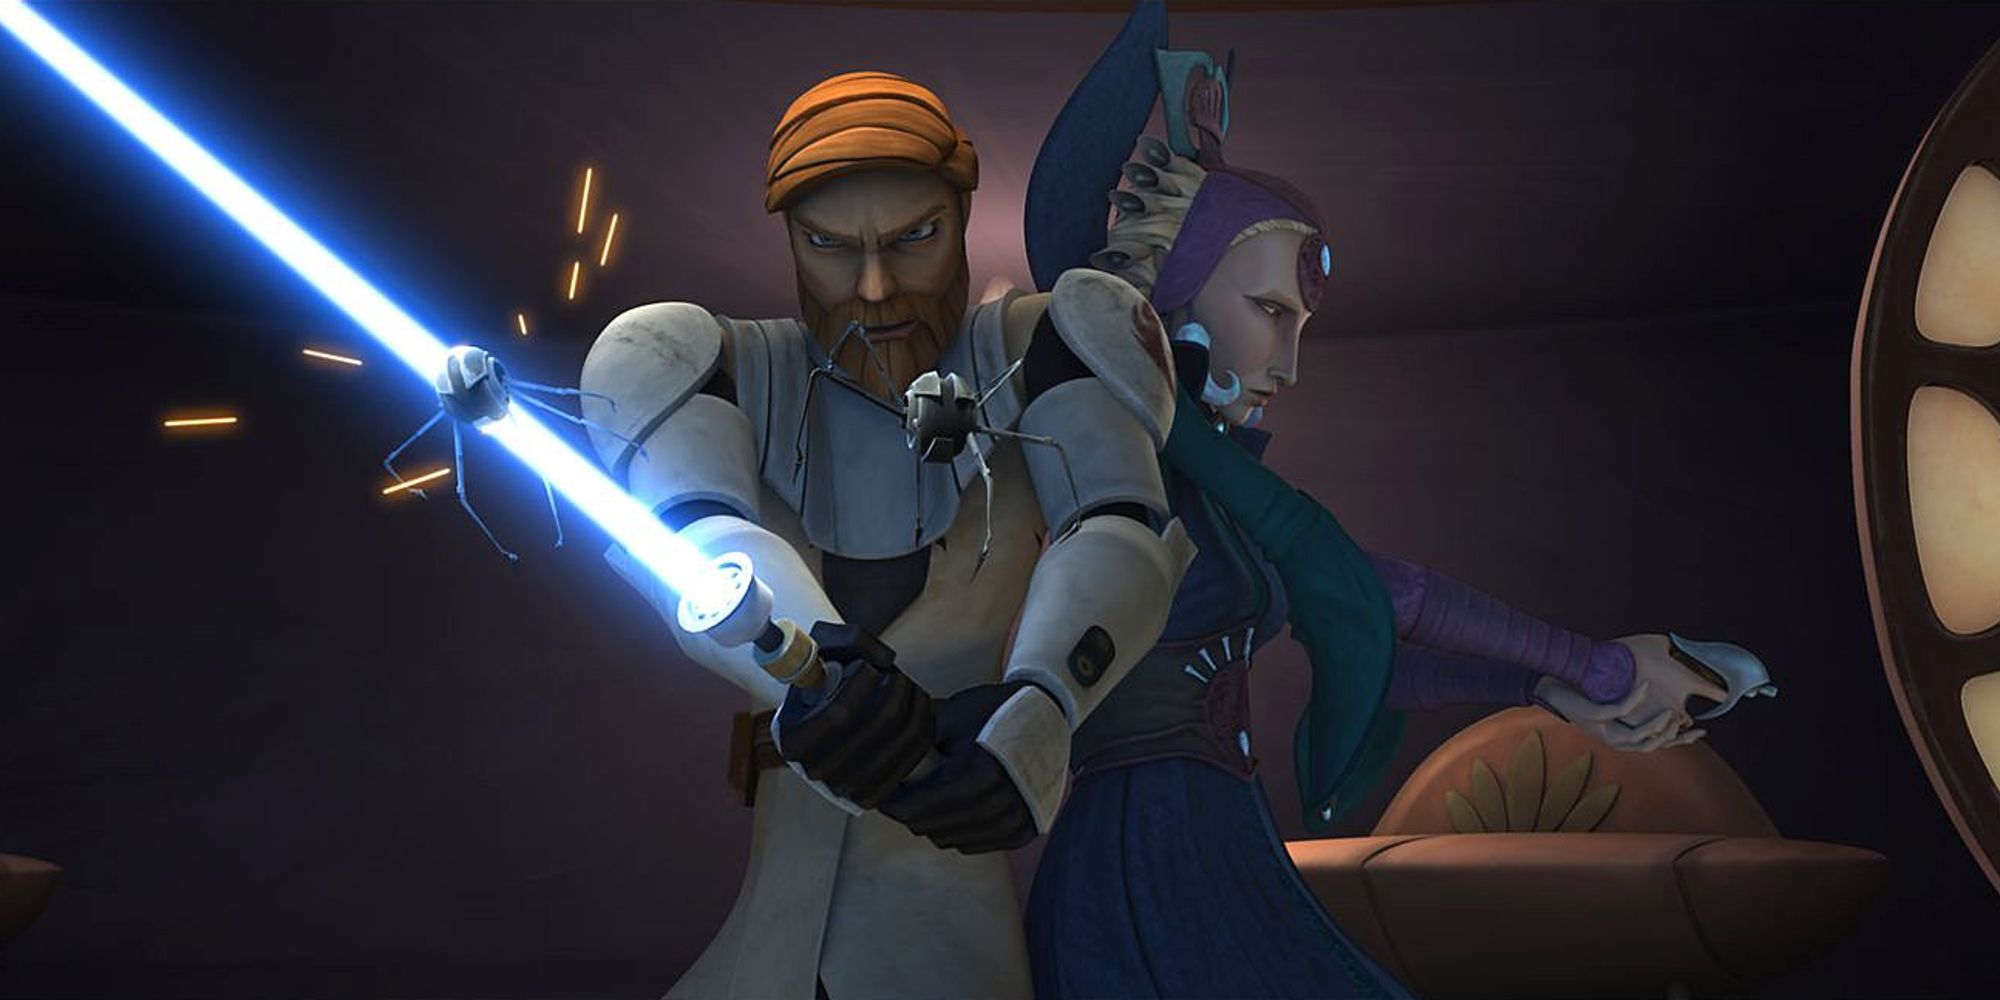 Obi-Wan Kenobi fighting back-to-back with Duchess Satine in Star Wars The Clone Wars